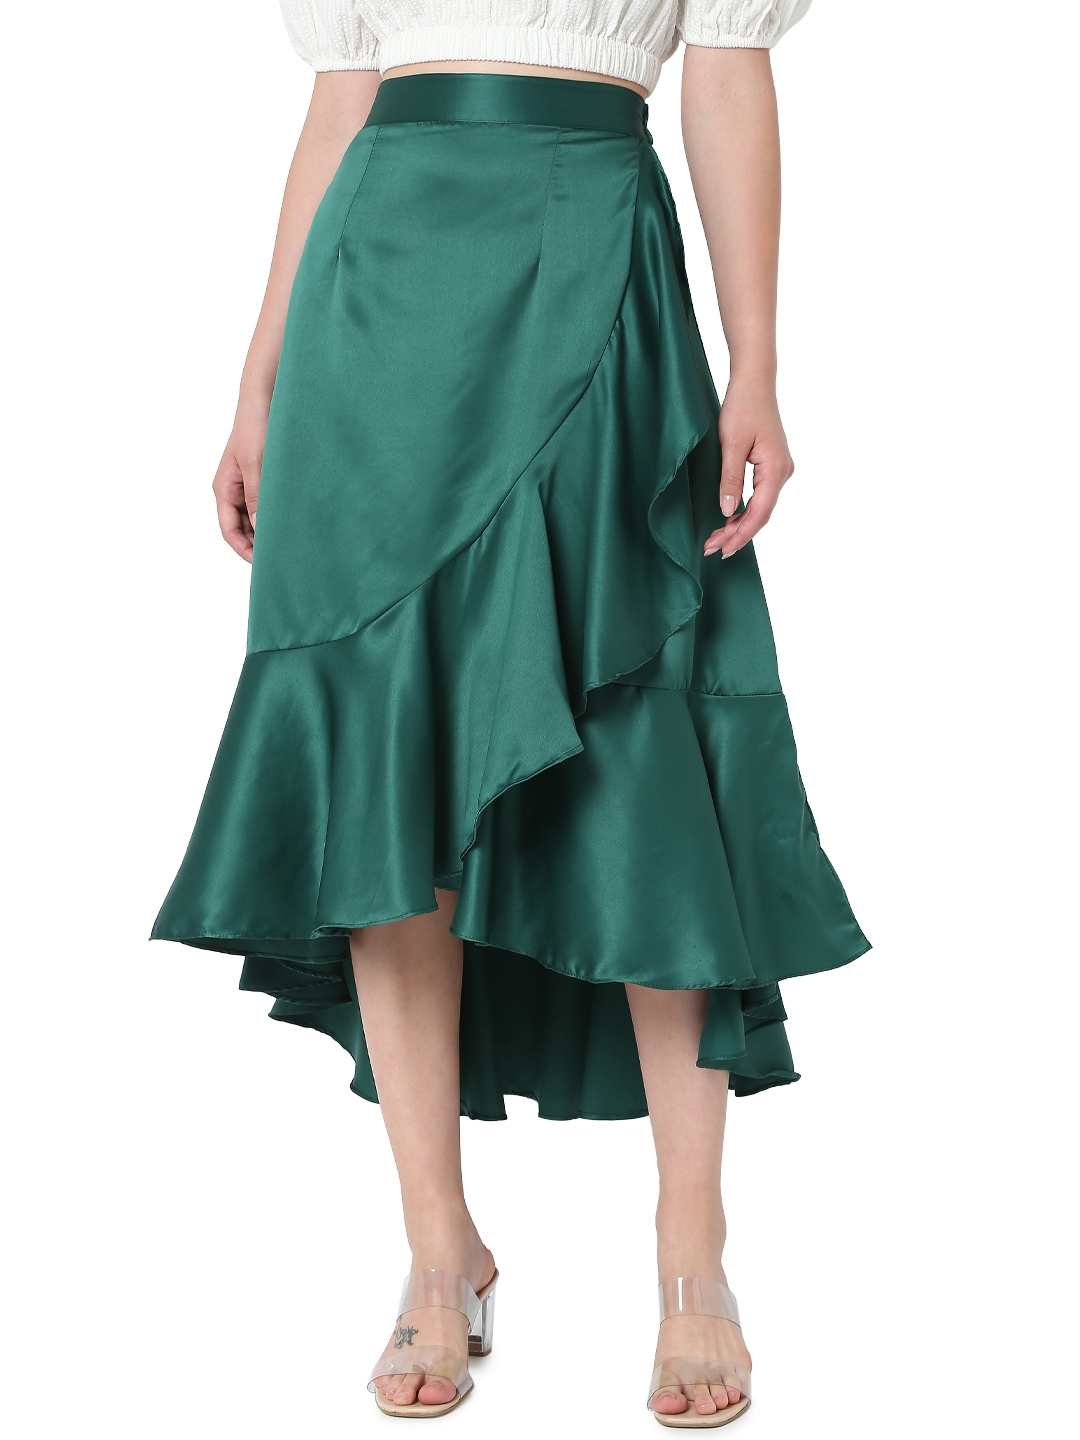 Smarty Pants | Smarty Pants women's silk satin bottle green color over lap ruffle skirt. 